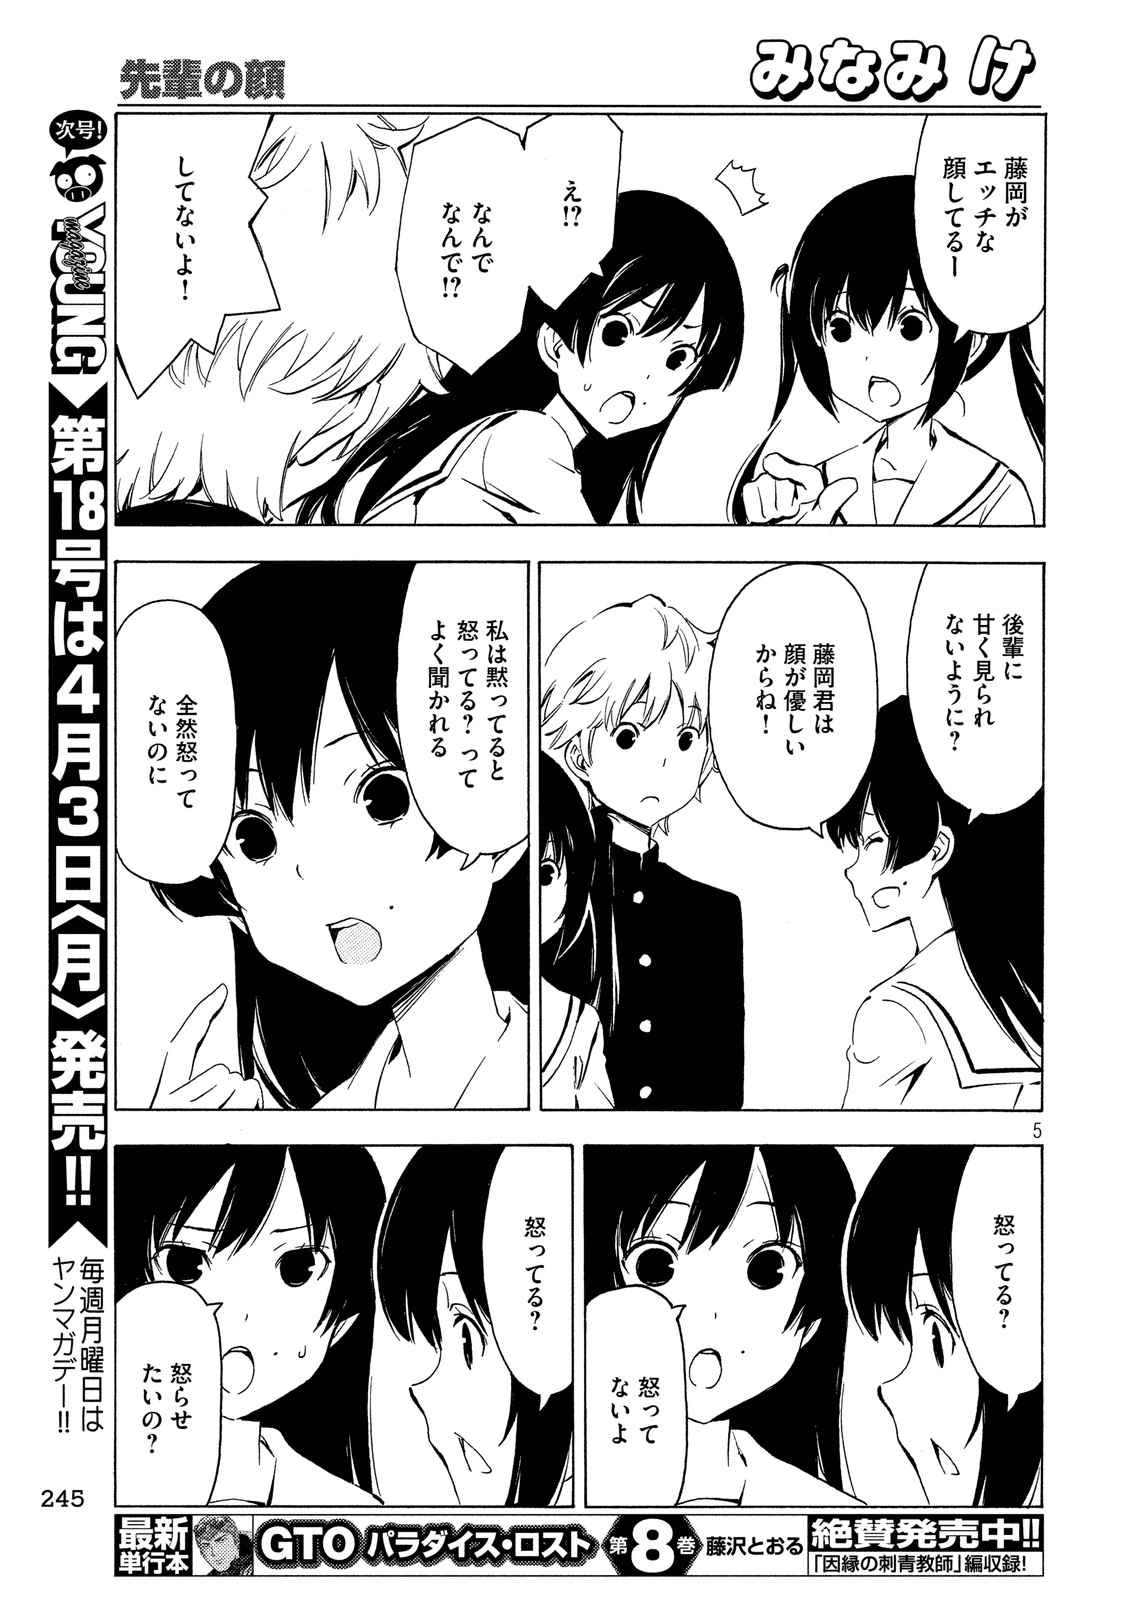 Minami-ke - Chapter 313 - Page 5